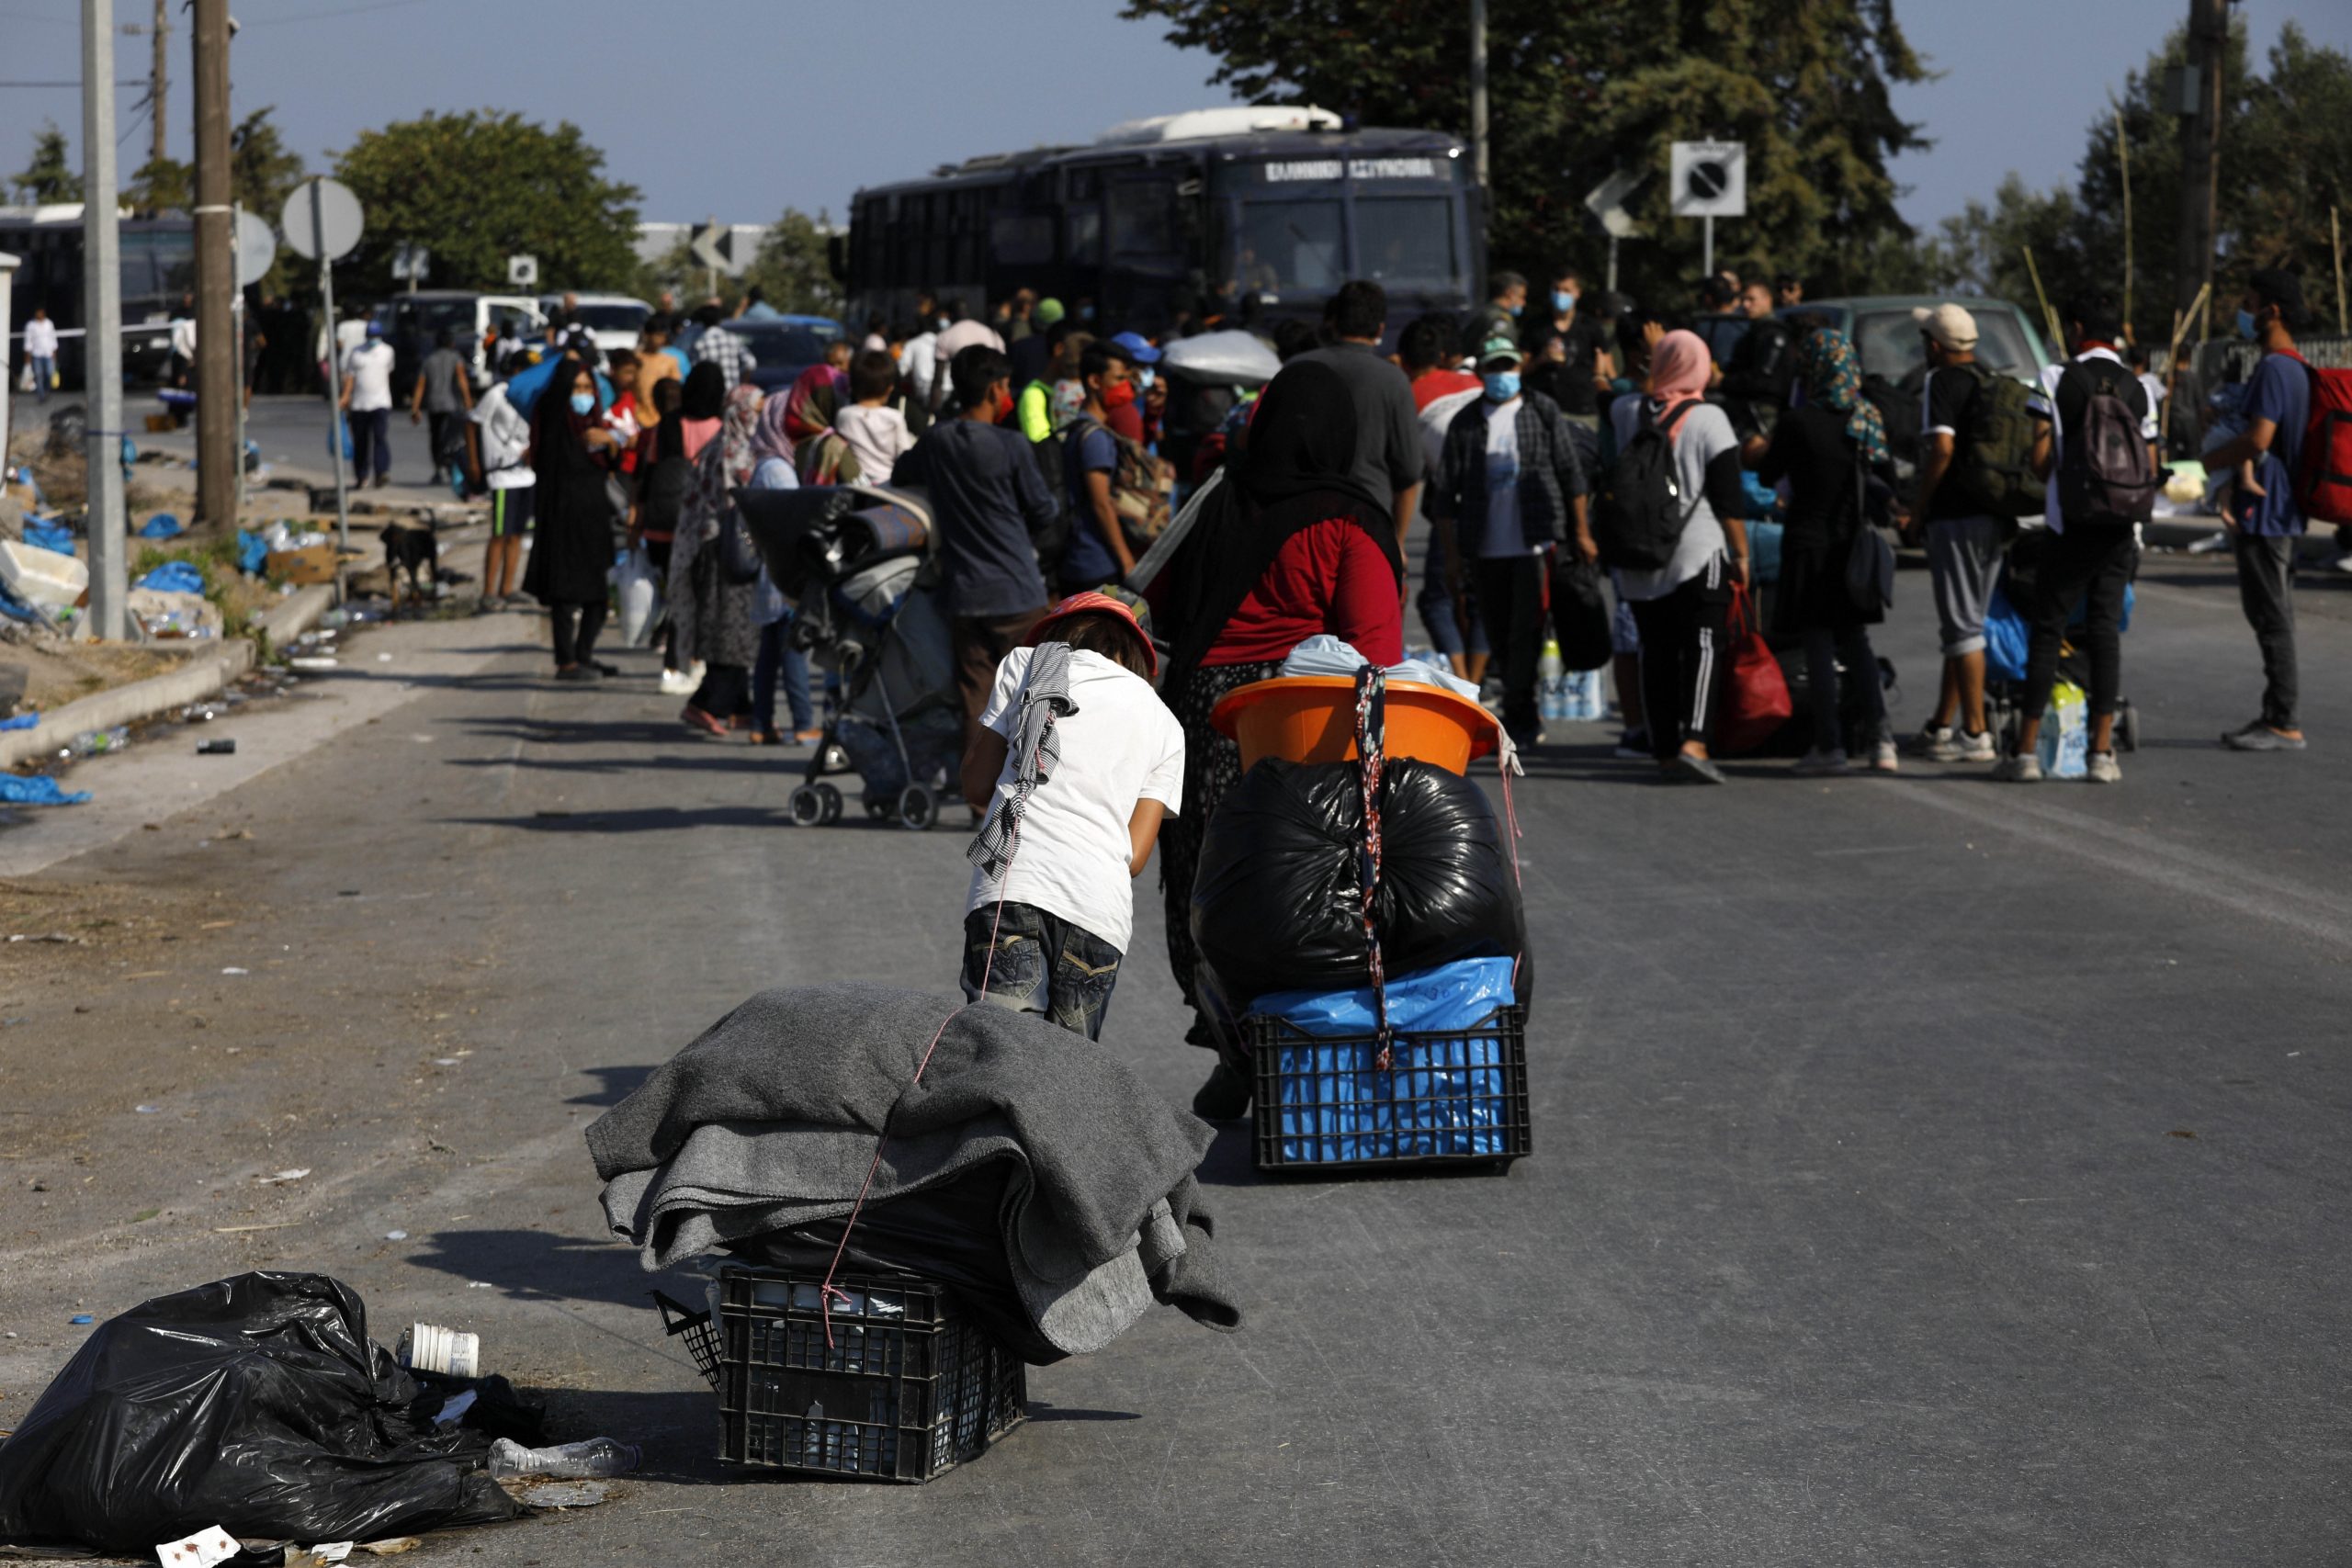 Greece says no unaccompanied minors remain in island camps